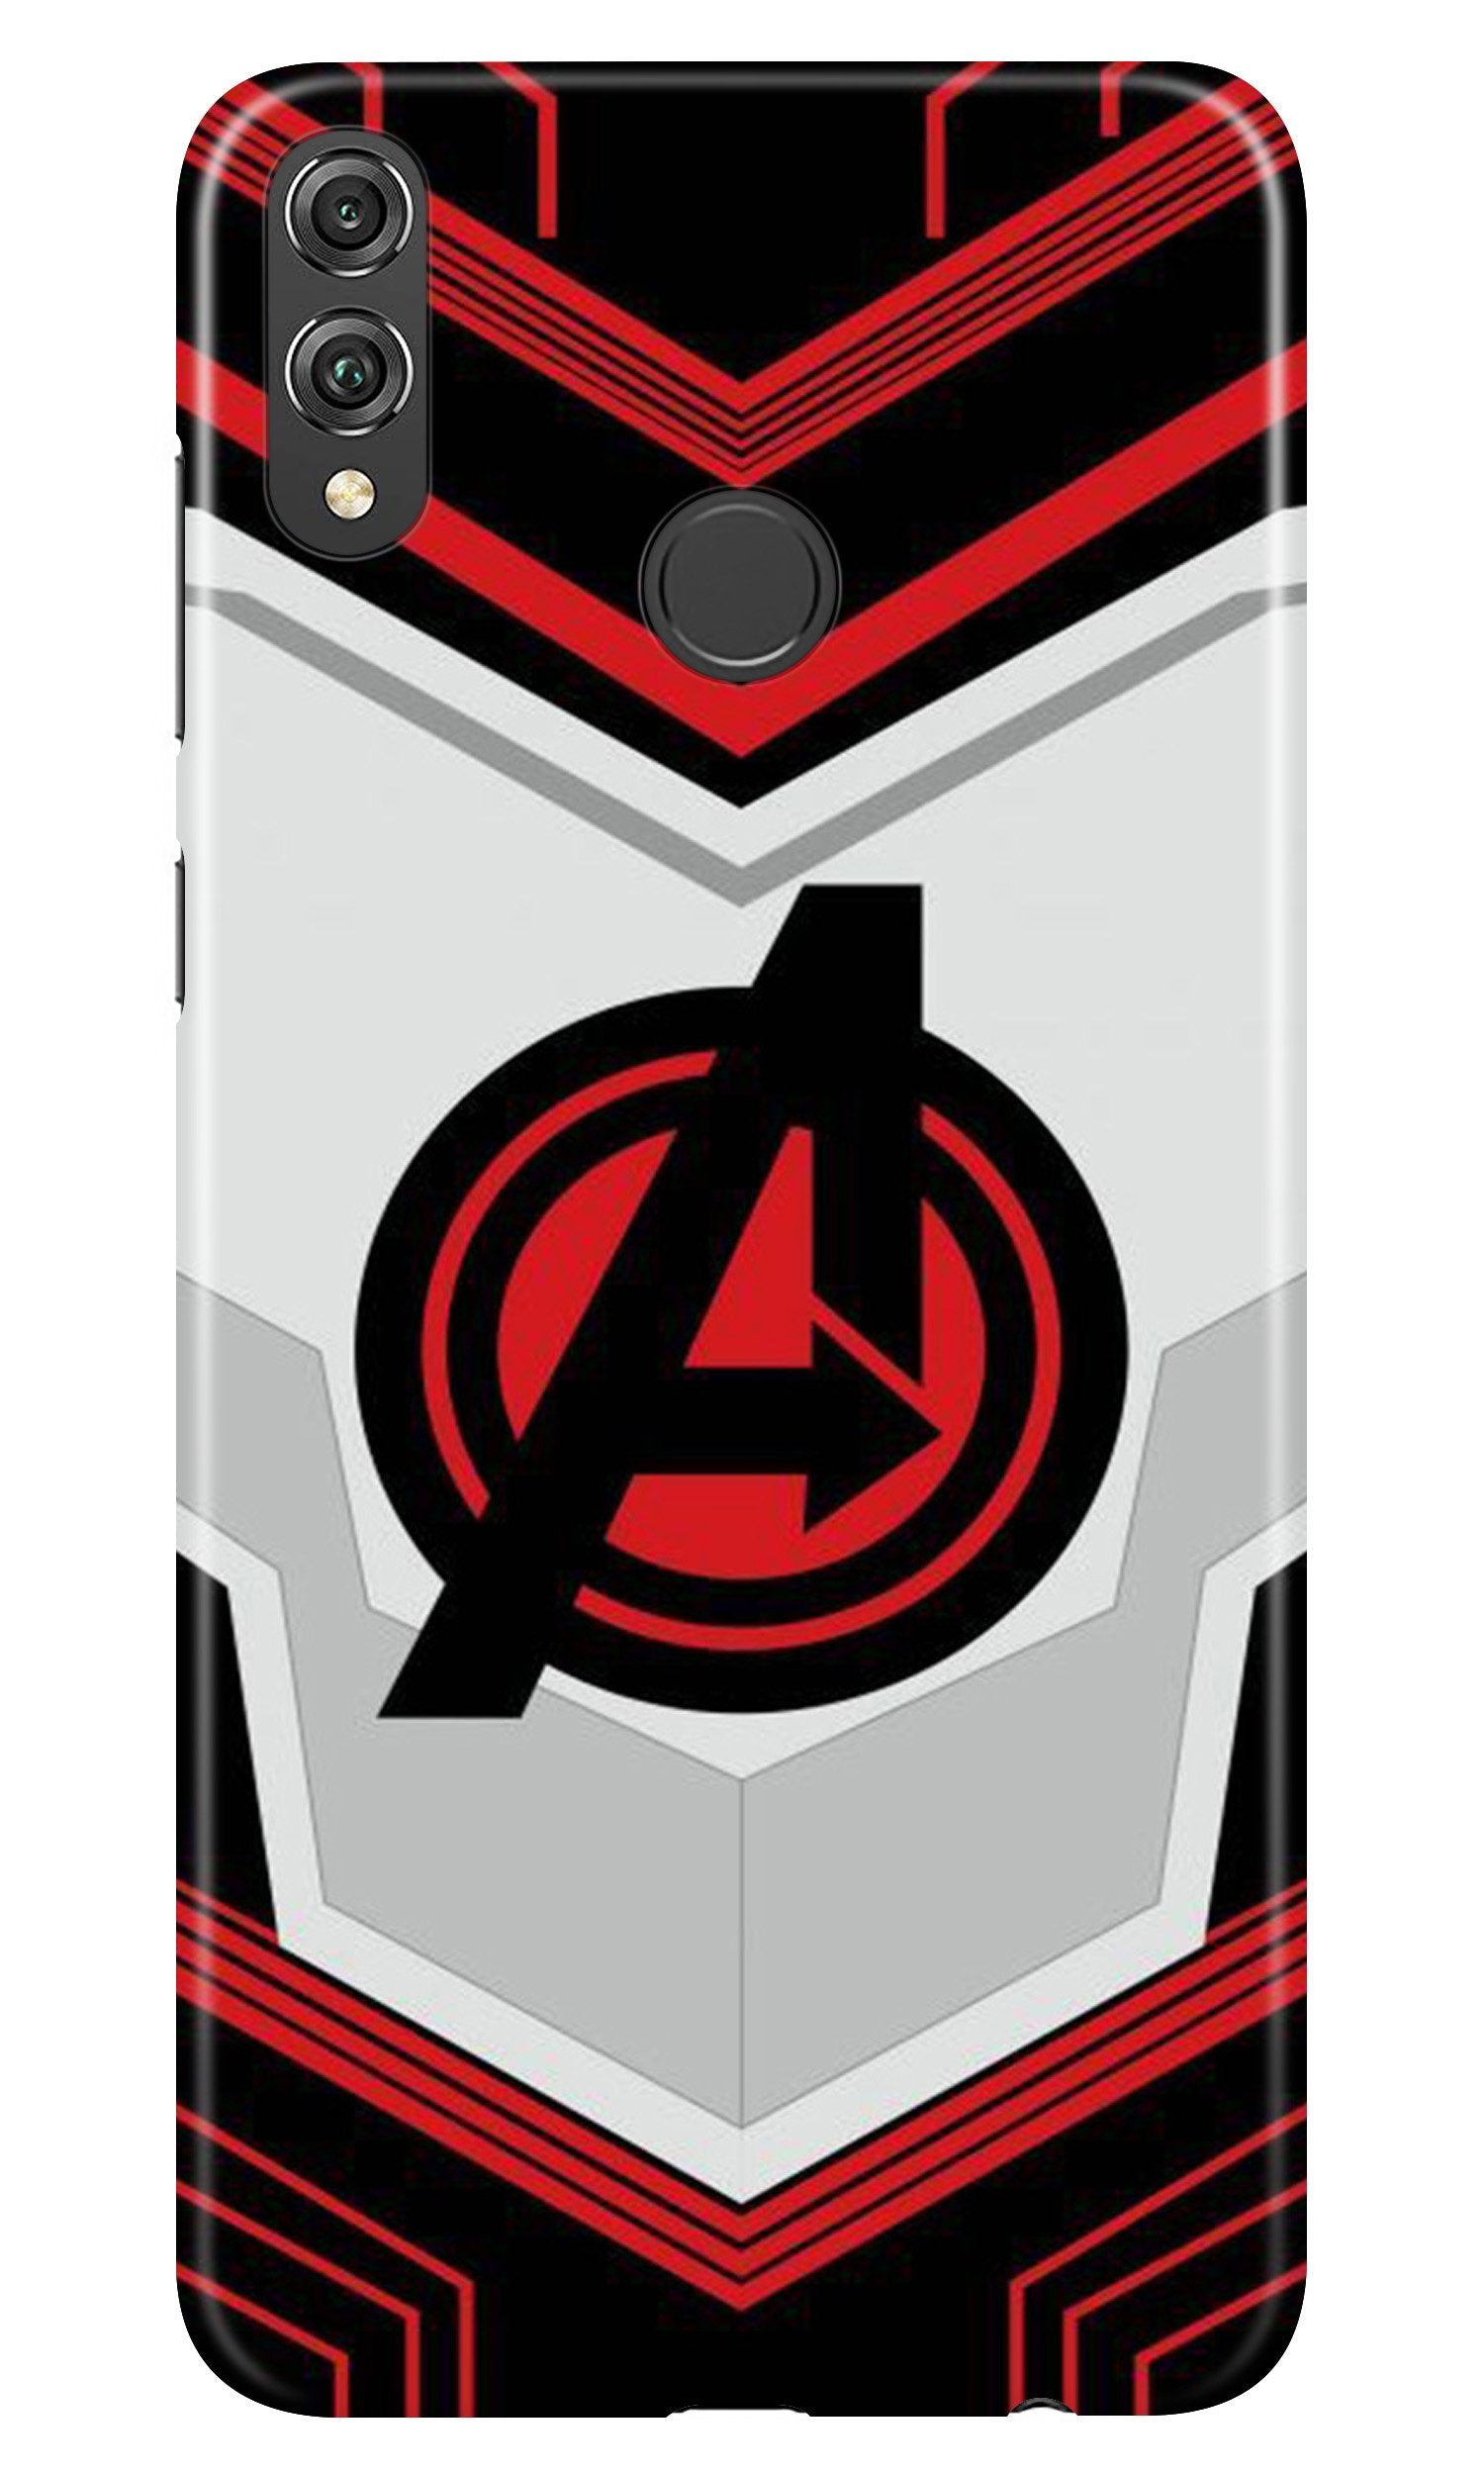 Avengers2 Case for Infinix Hot 7 Pro (Design No. 255)